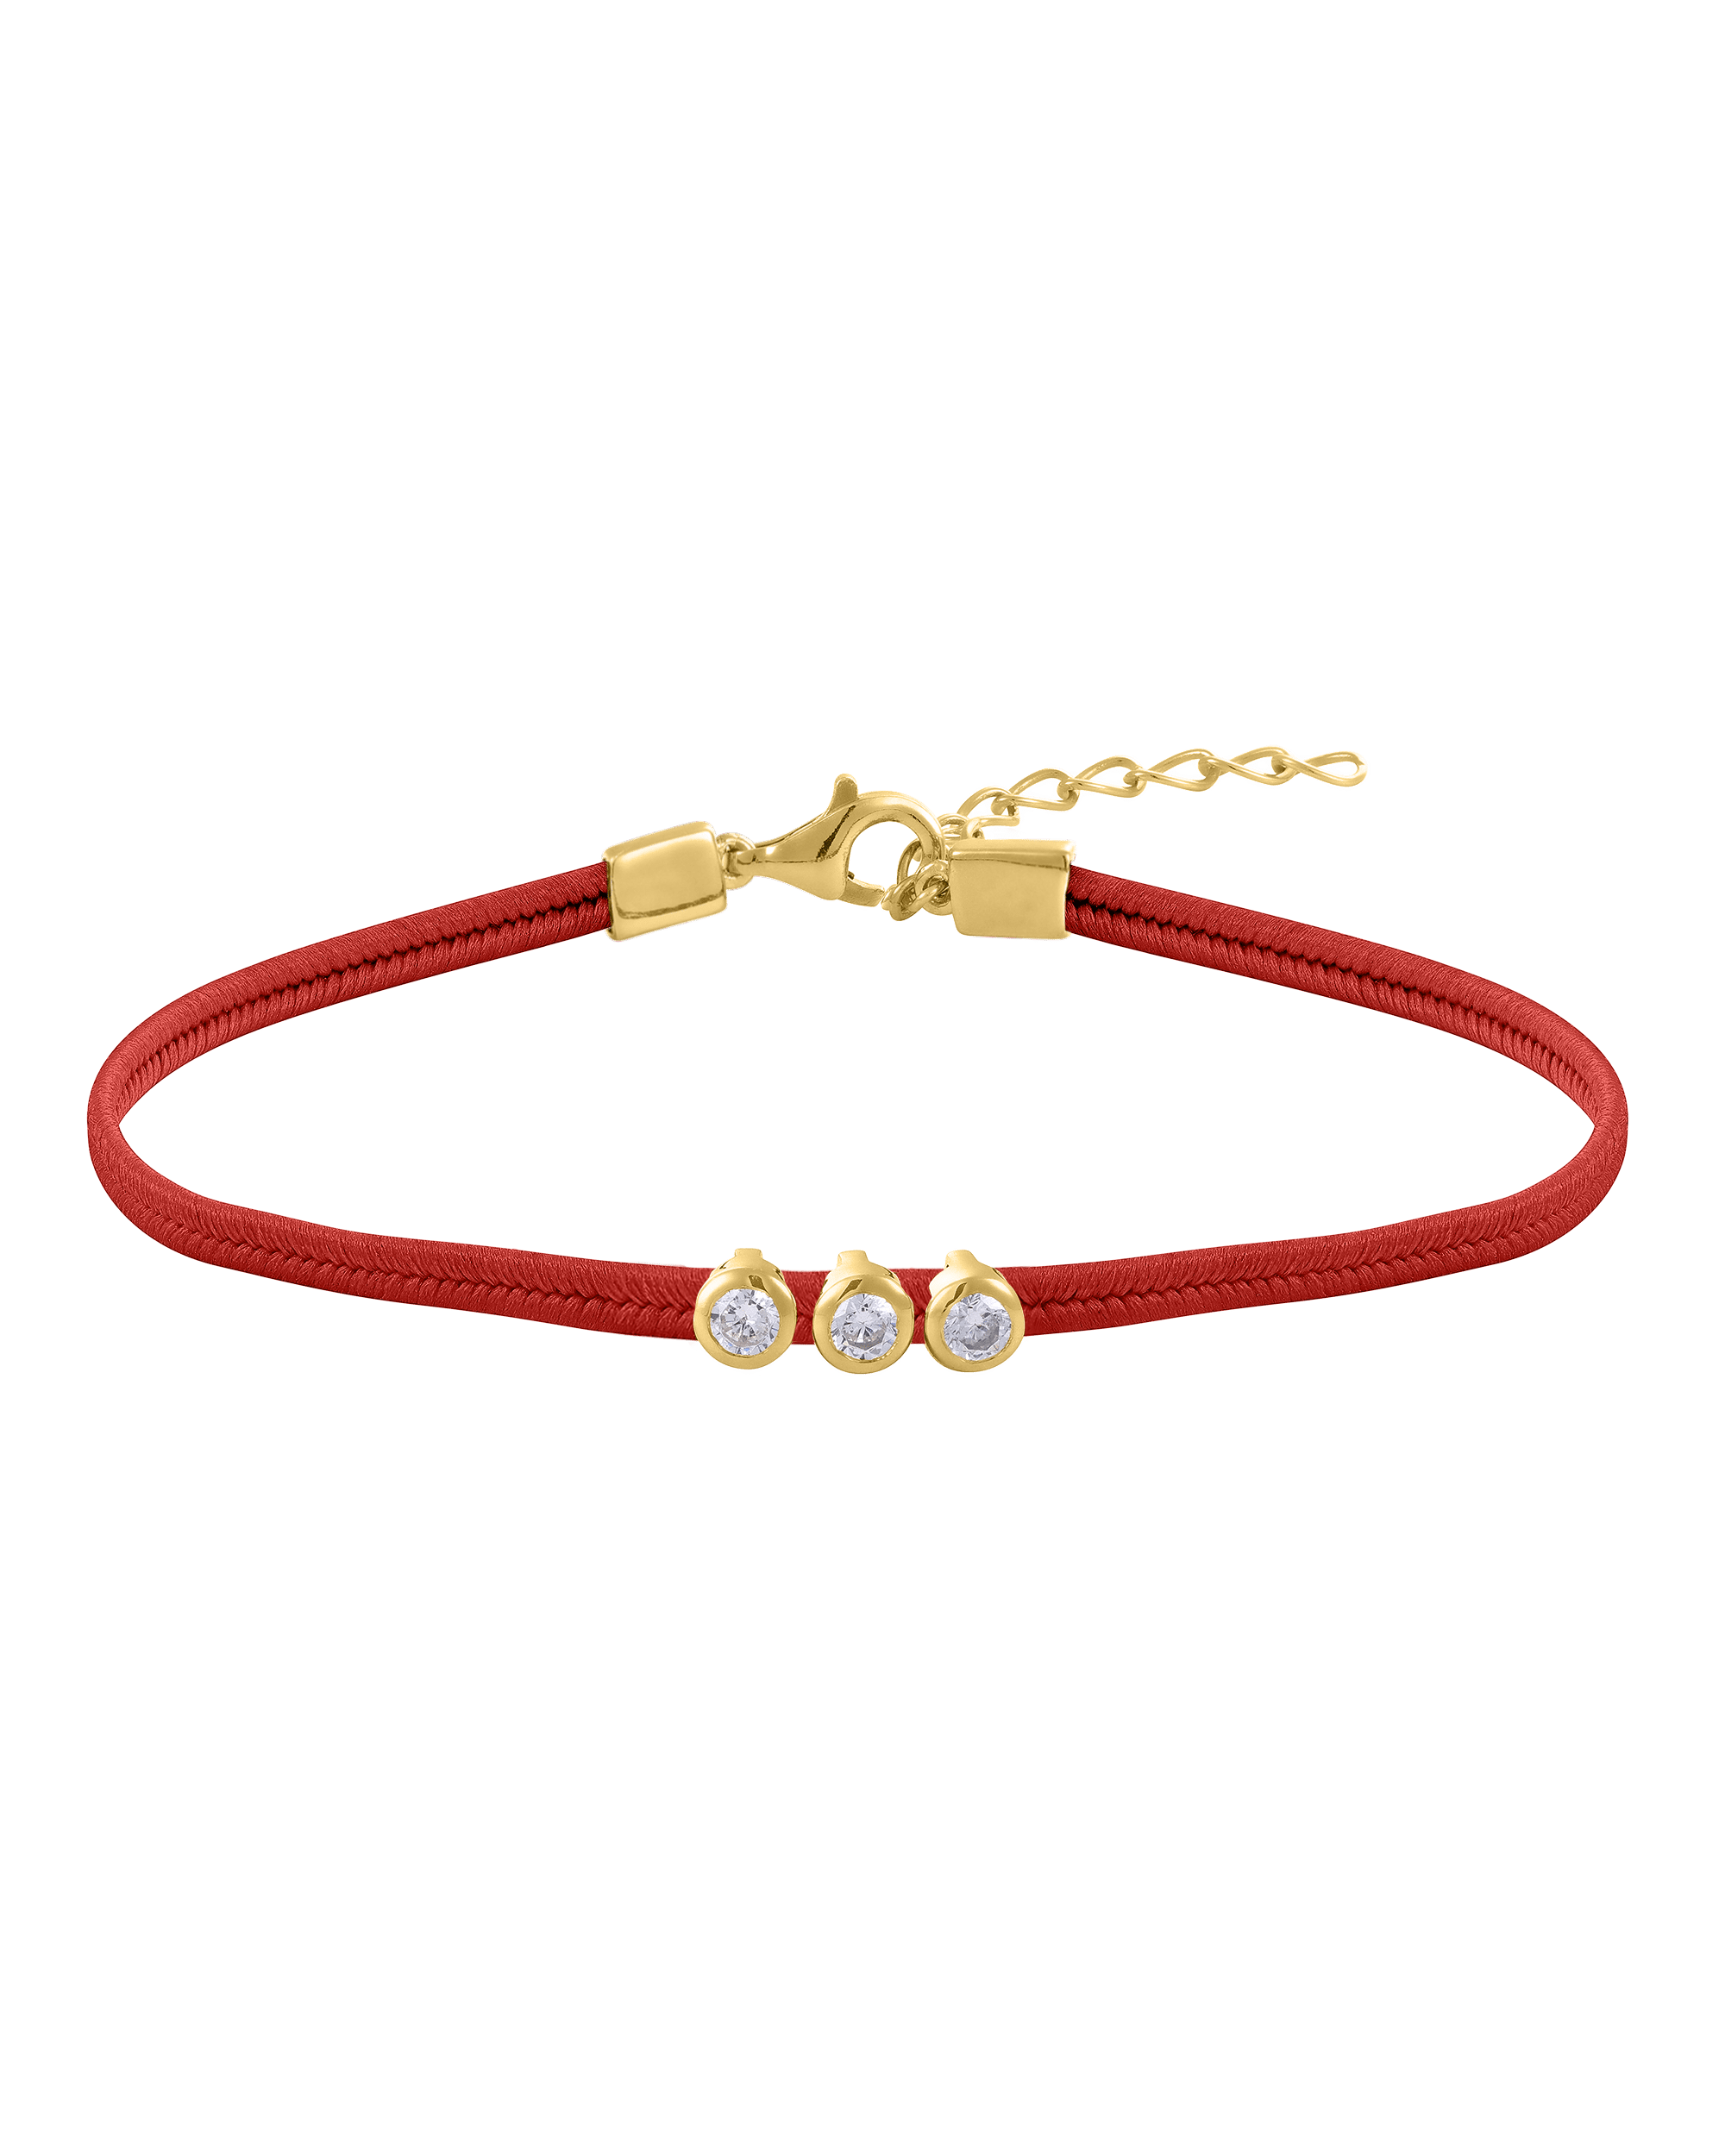 The Cord of Love - 18K Gold Vermeil Bracelets magal-dev 1 Diamond Red 